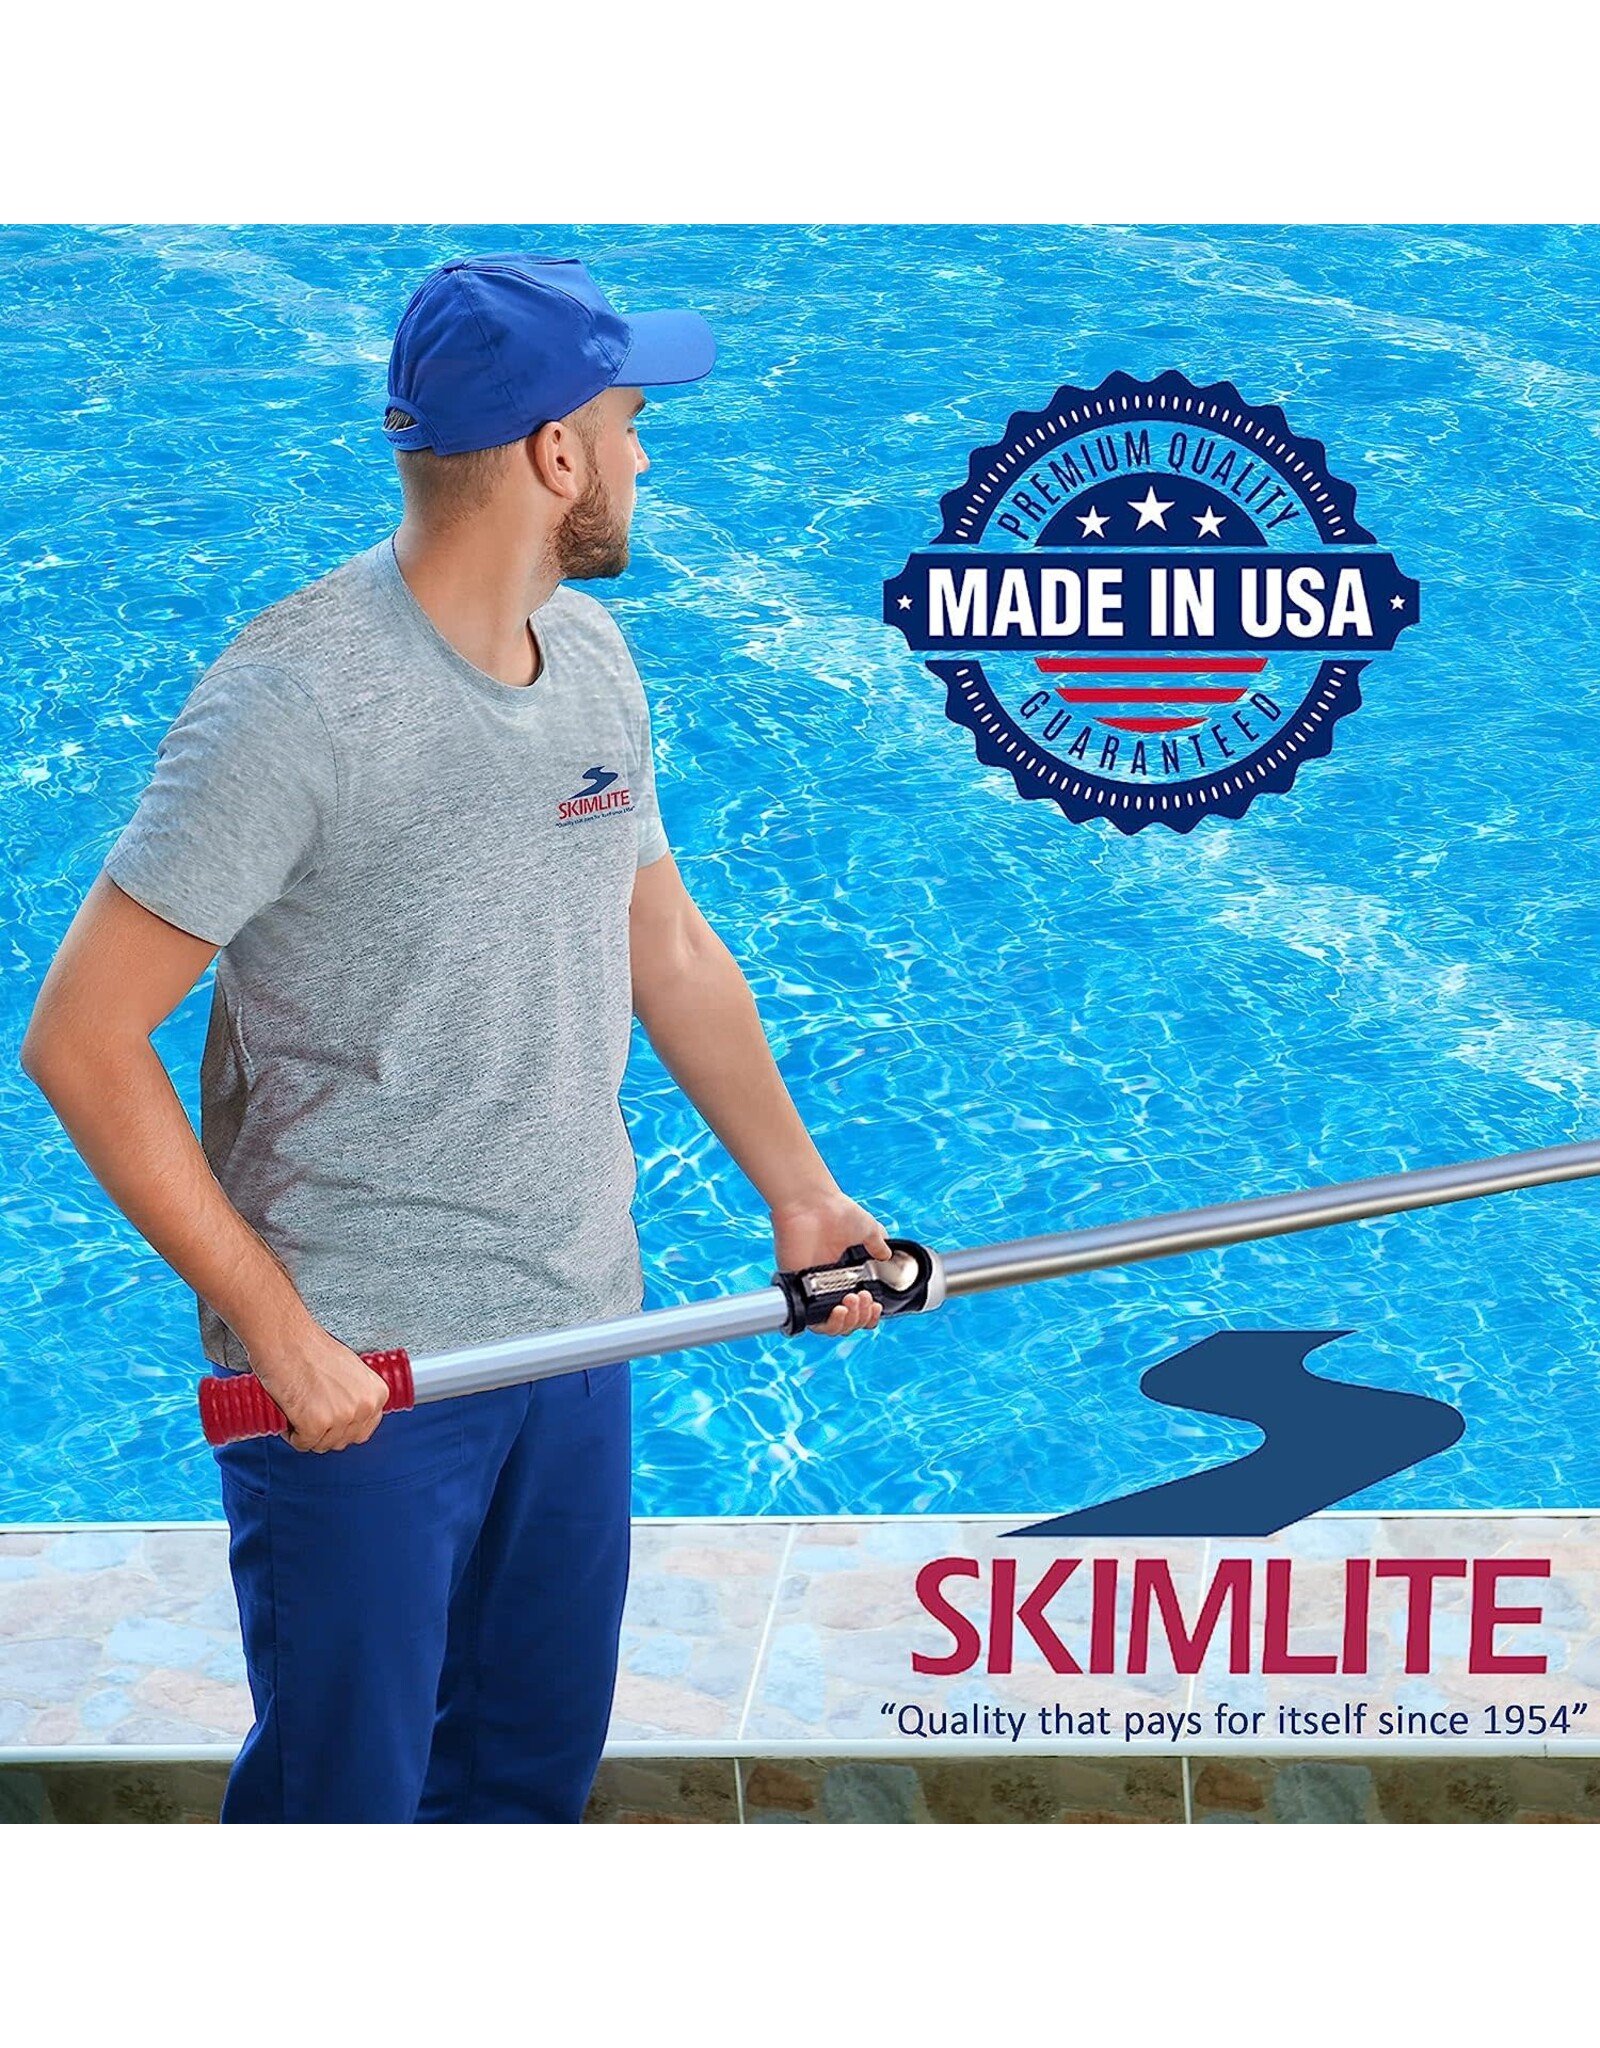 Skimlite Pool Pole - 8 to 16 Foot SnapLite Series